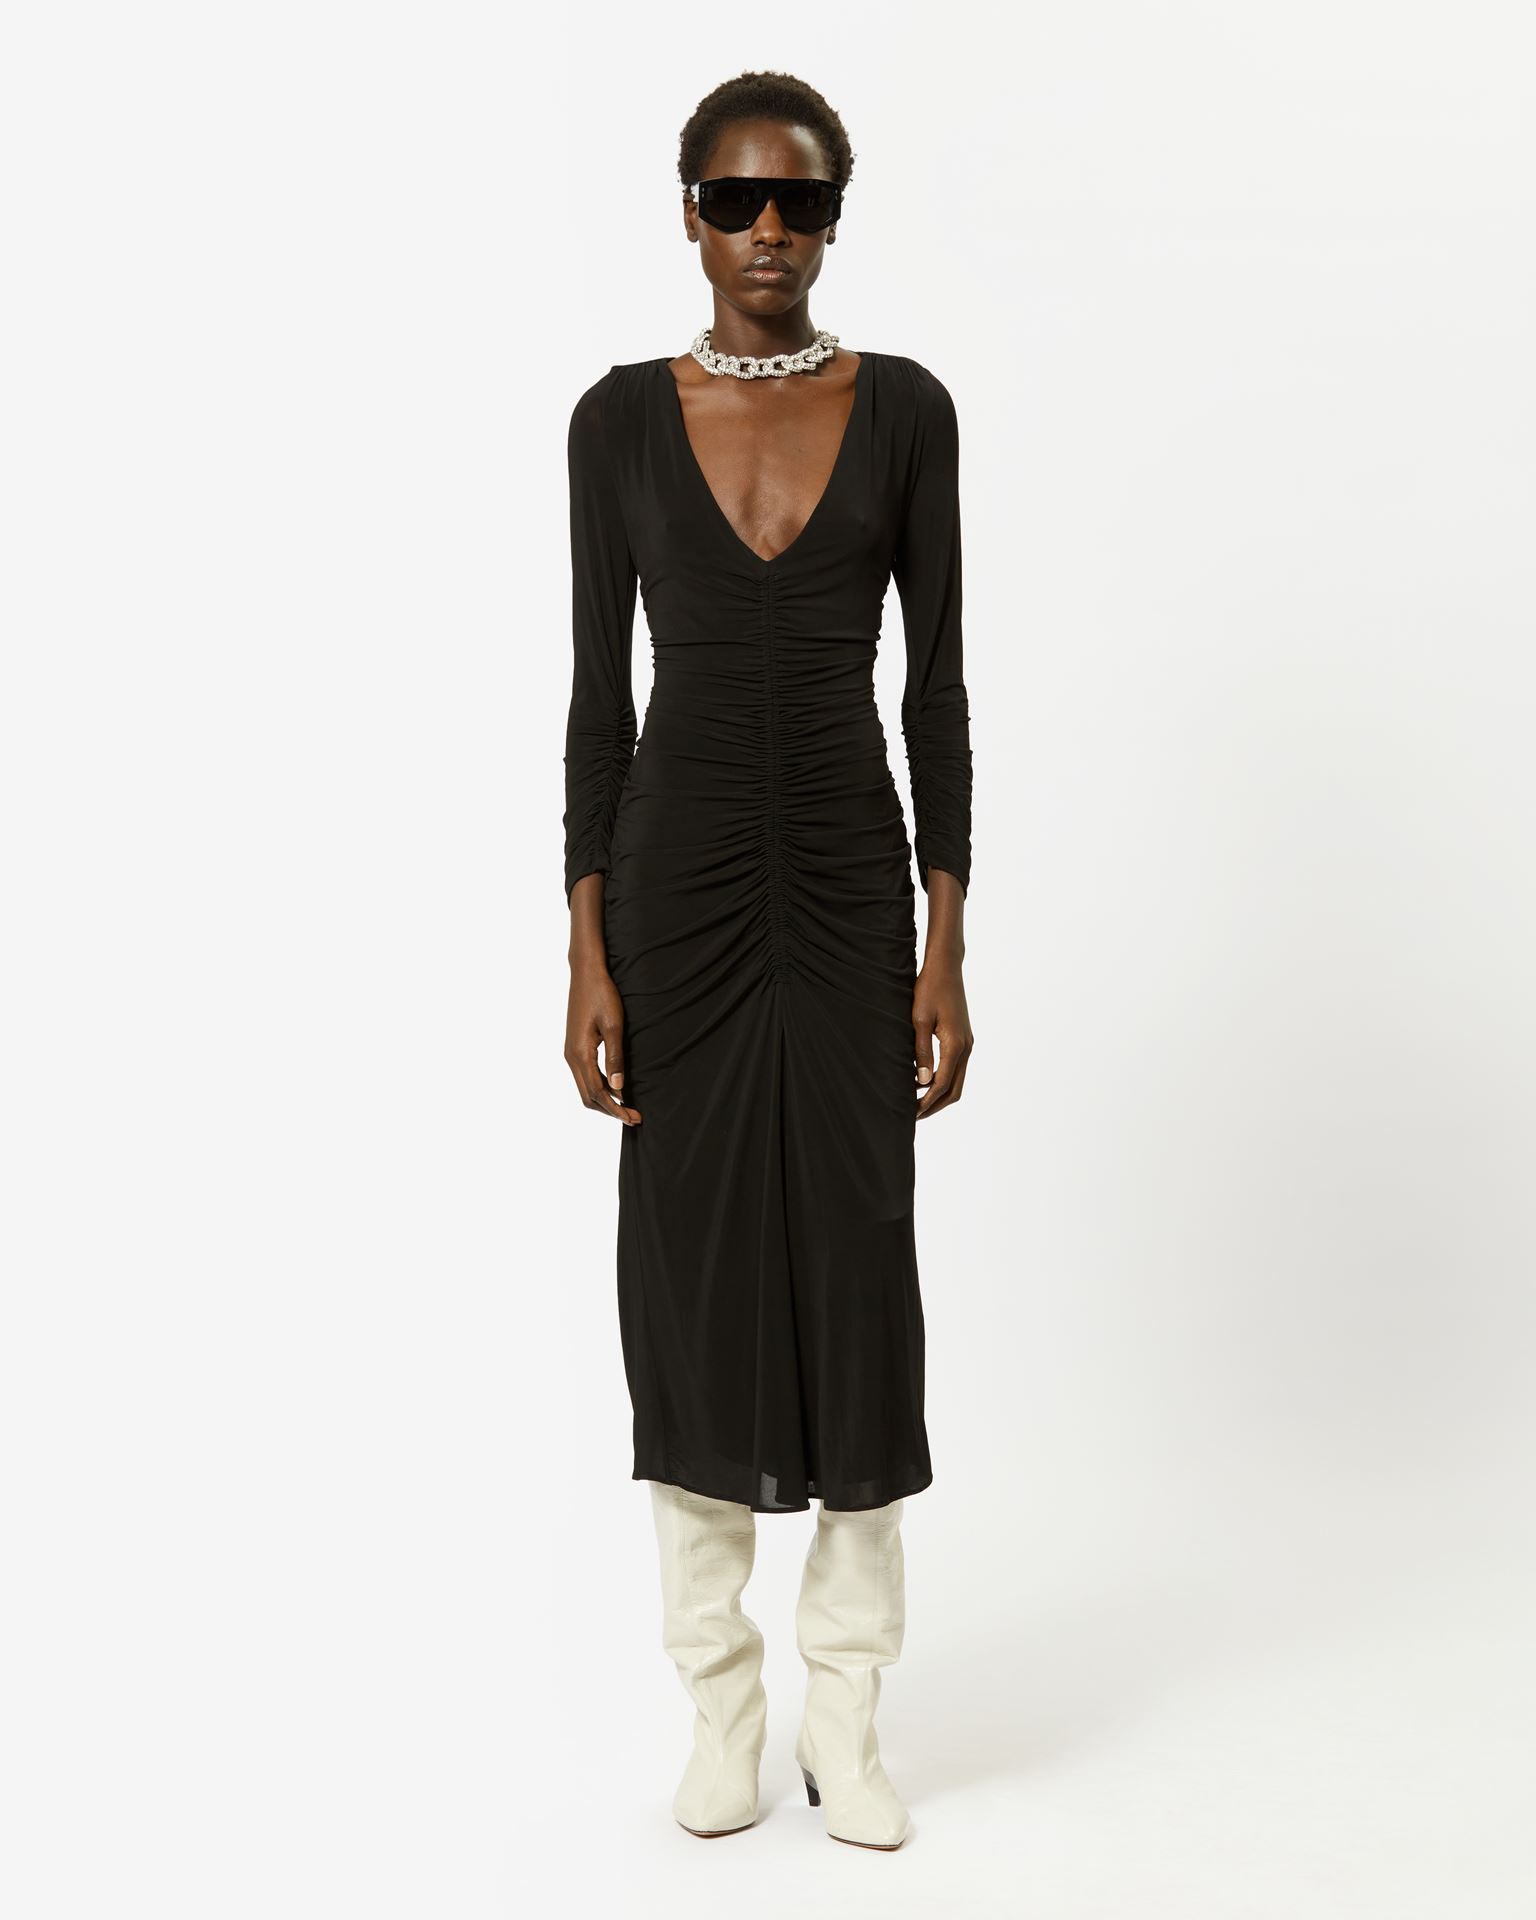 Isabel Marant, Laly Dress - Women - Black